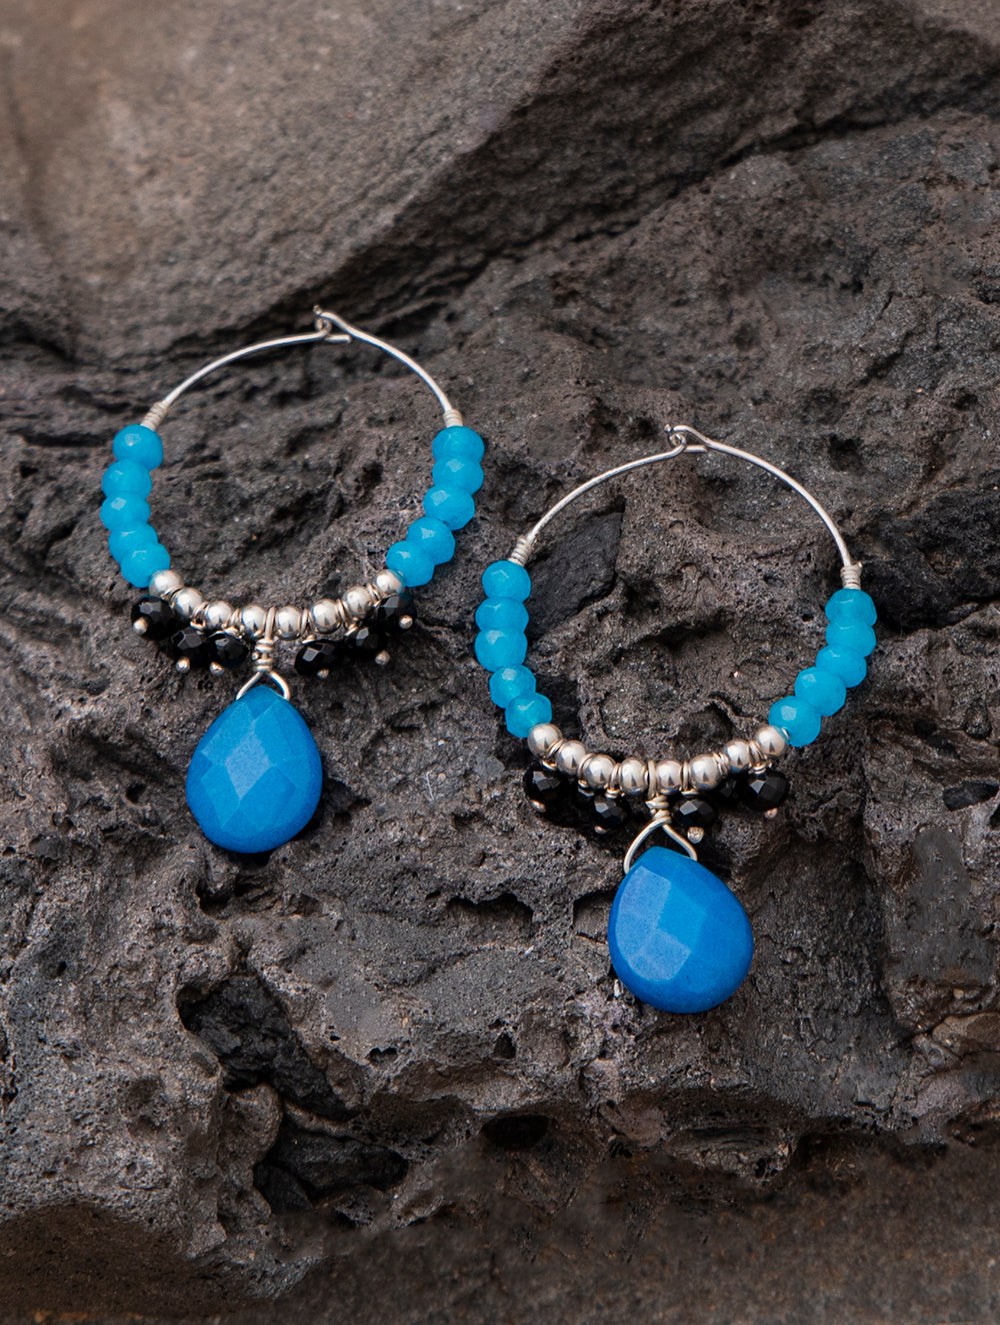 Buy Pure Silver Earrings With Semi Precious Stones - Oceanic Hoops Online